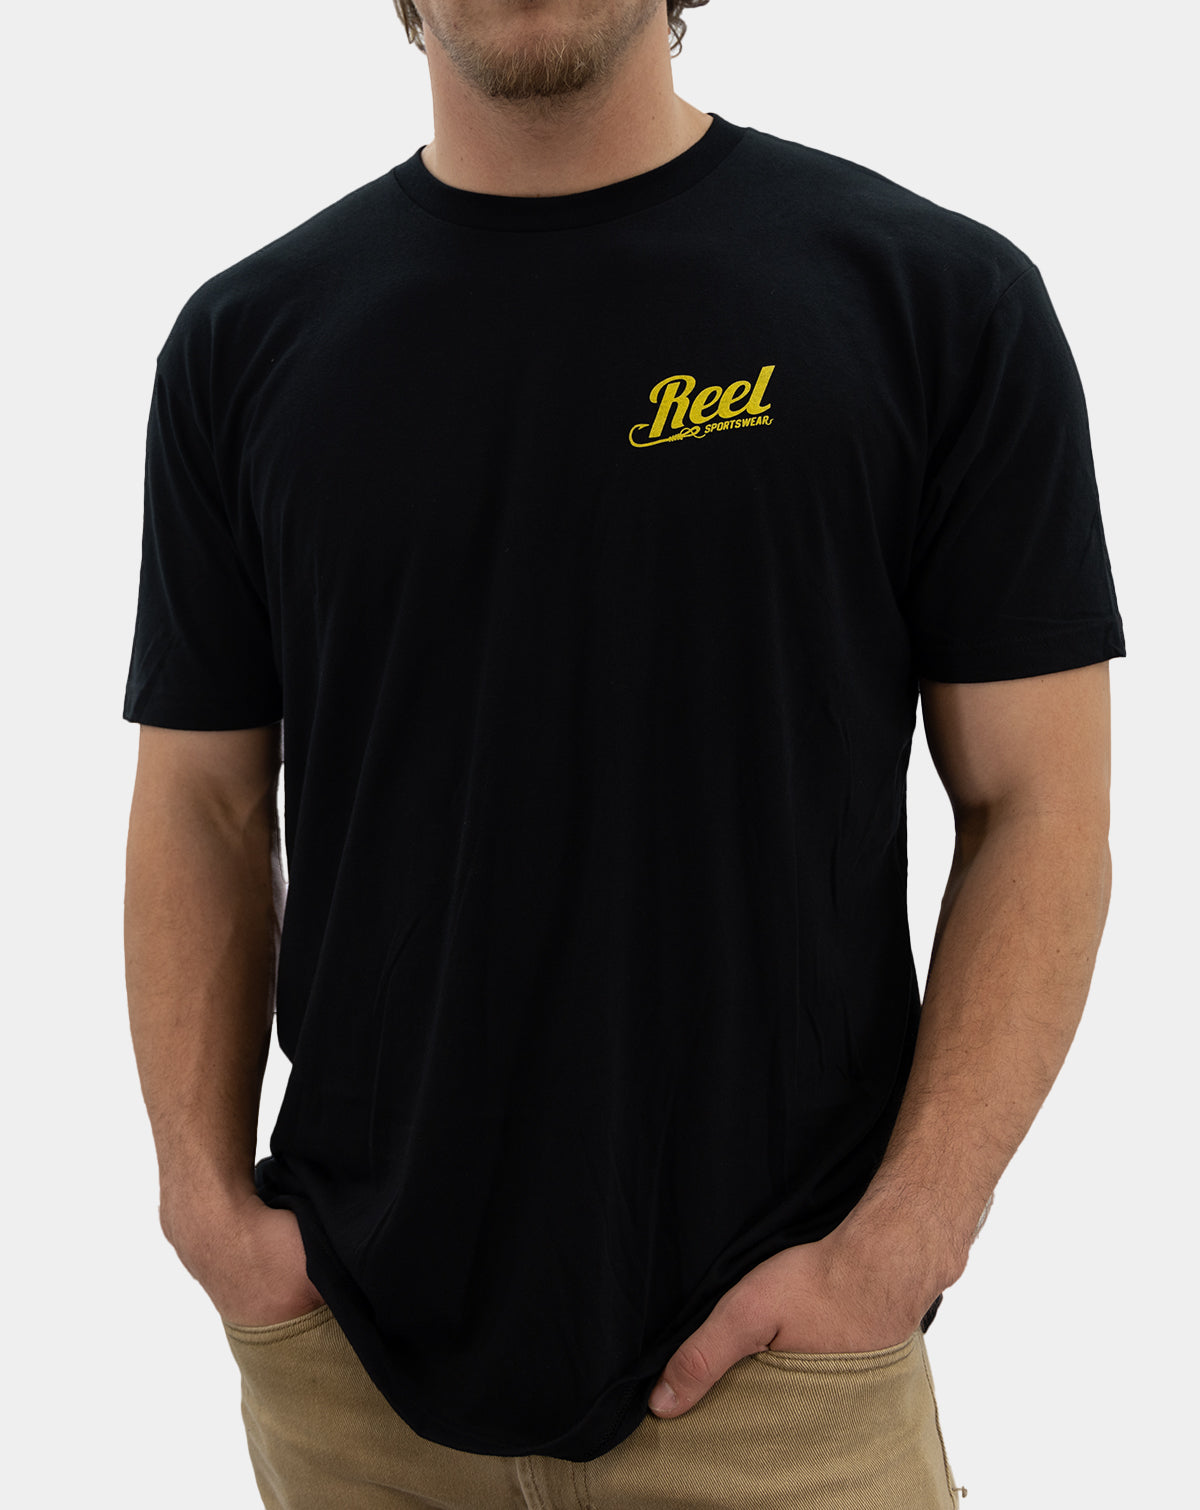 Reel outdoorsman tournament fishing jersey, T-shirt contest